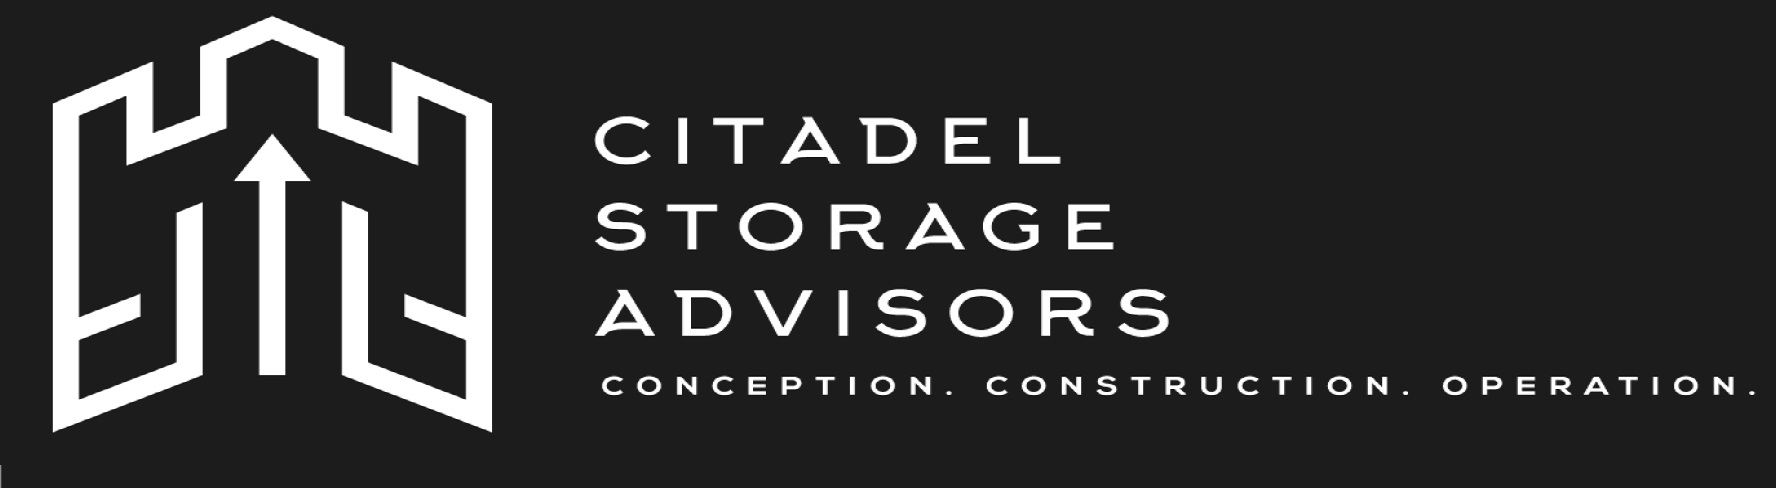 Citadel Advisors logo